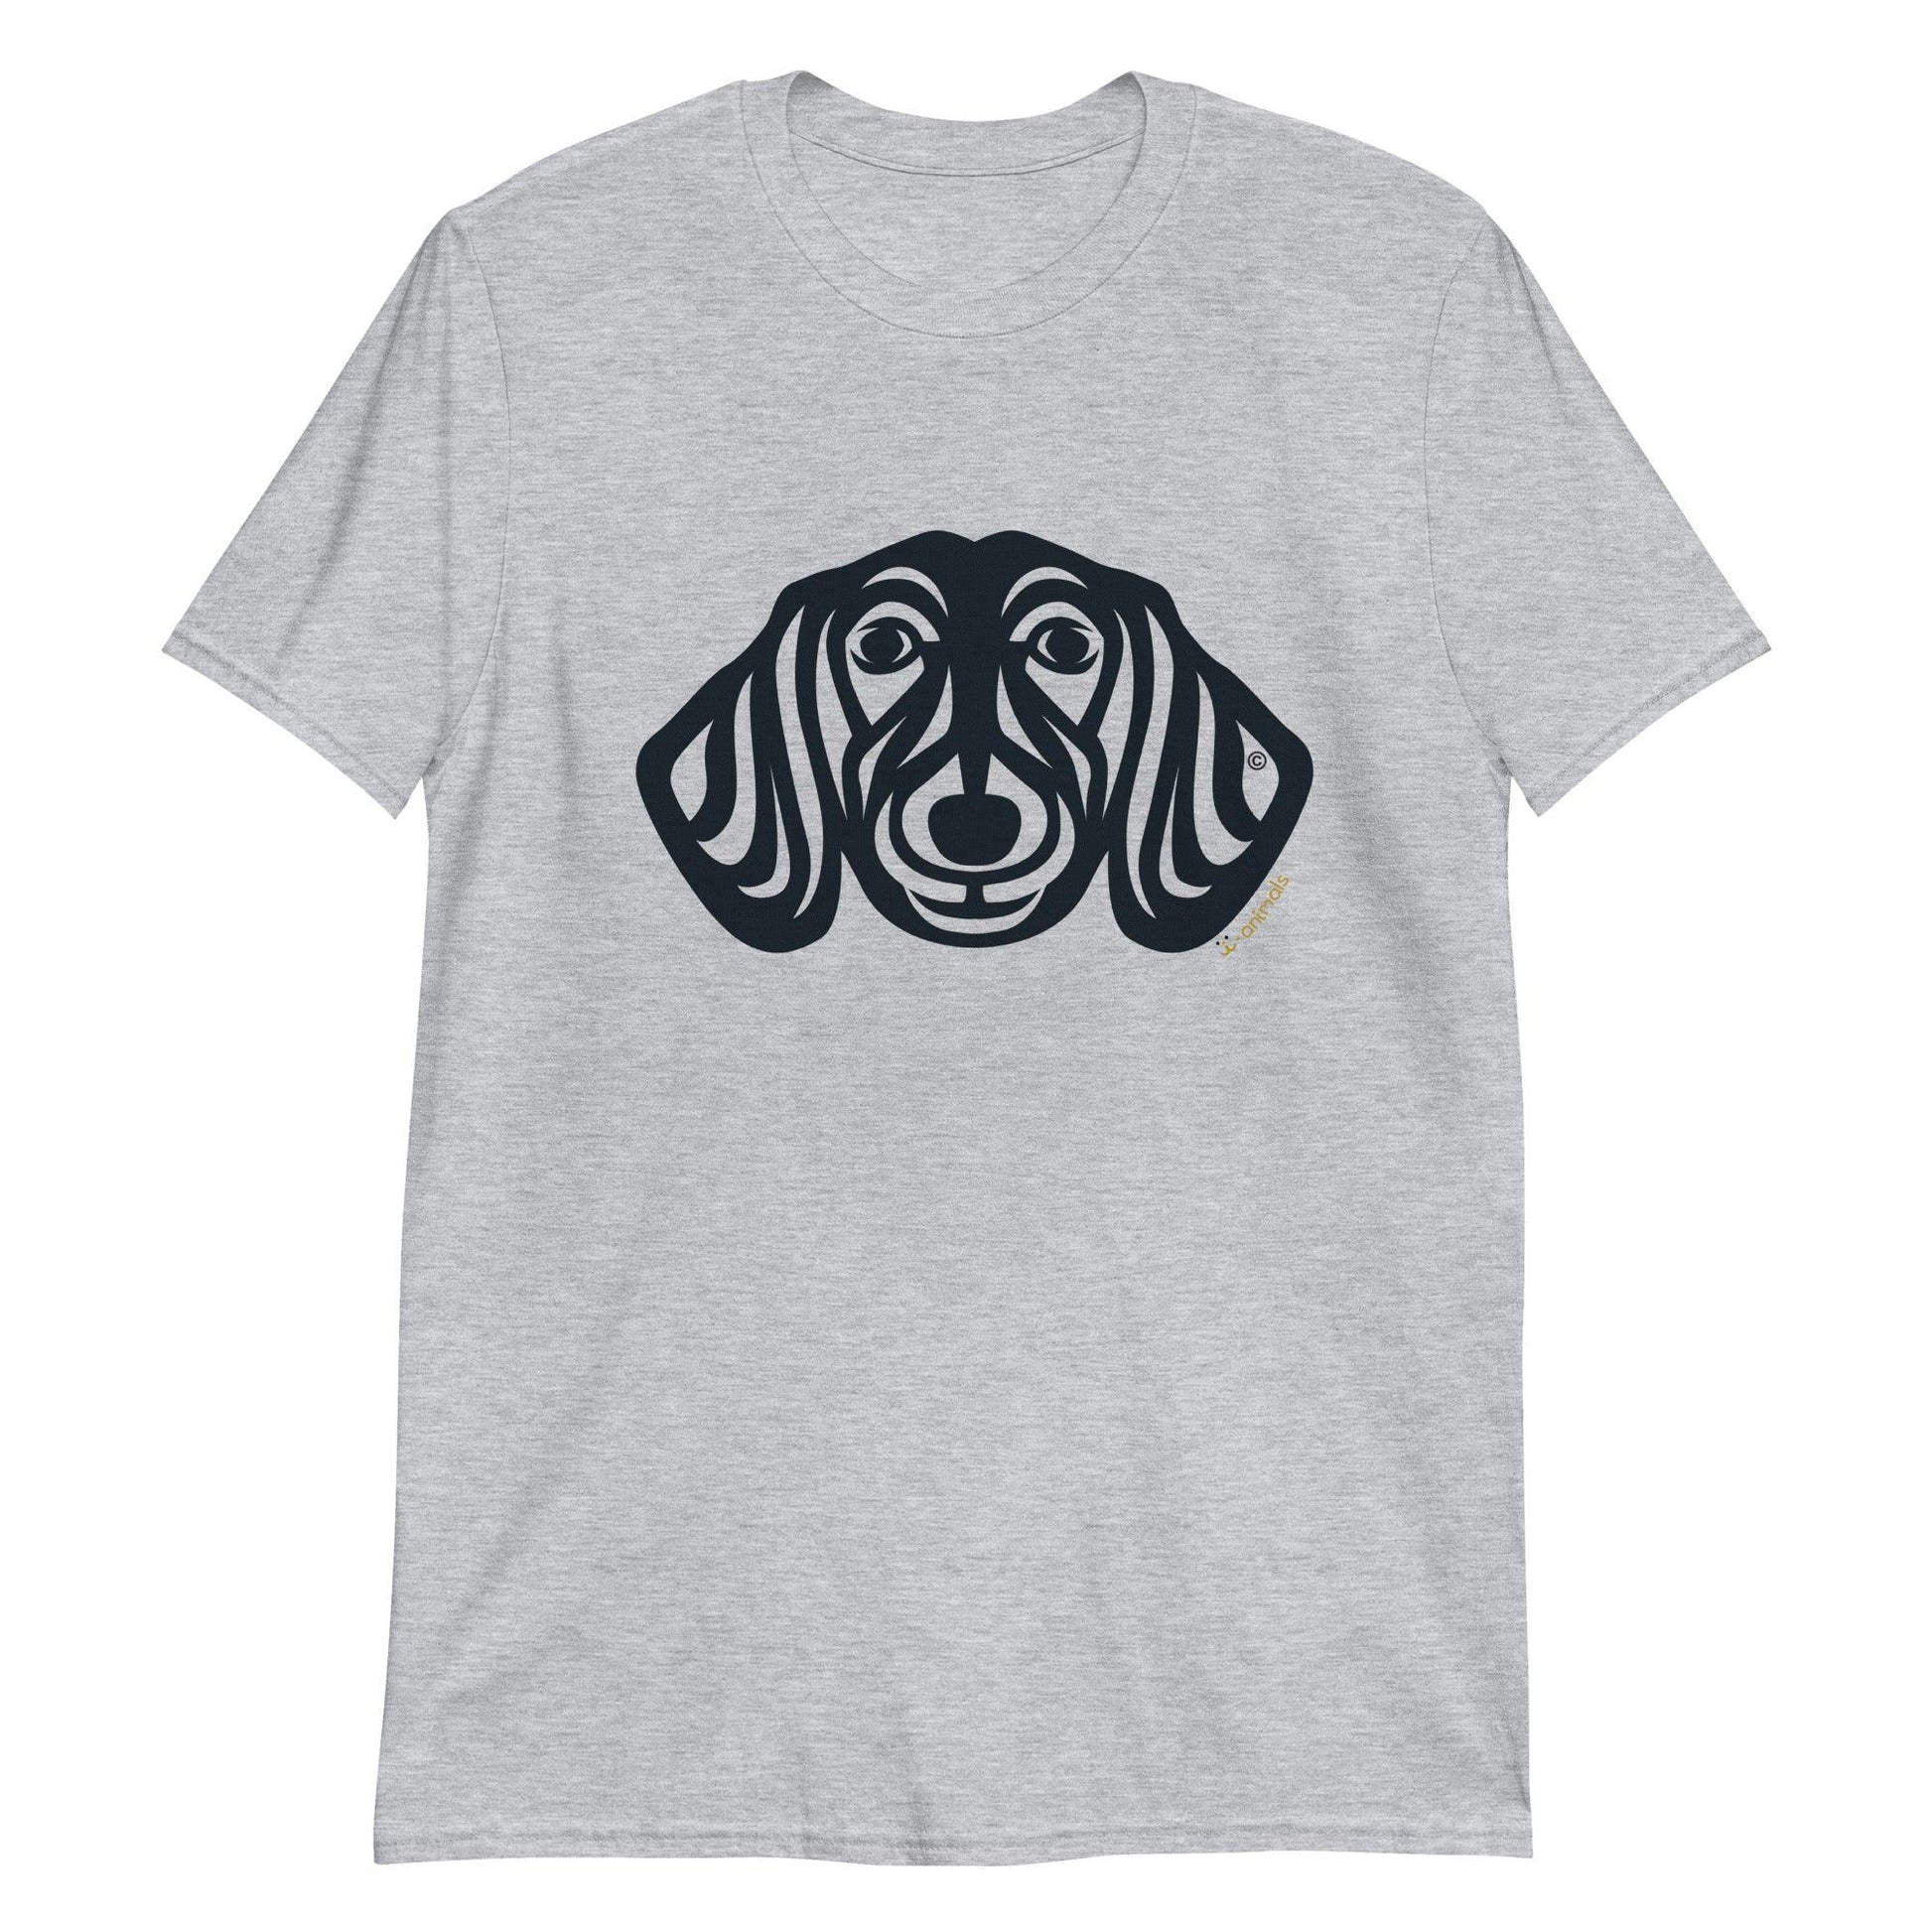 Camiseta unissex de manga curta - Dachshund - Tribal - Cores Claras i-animals